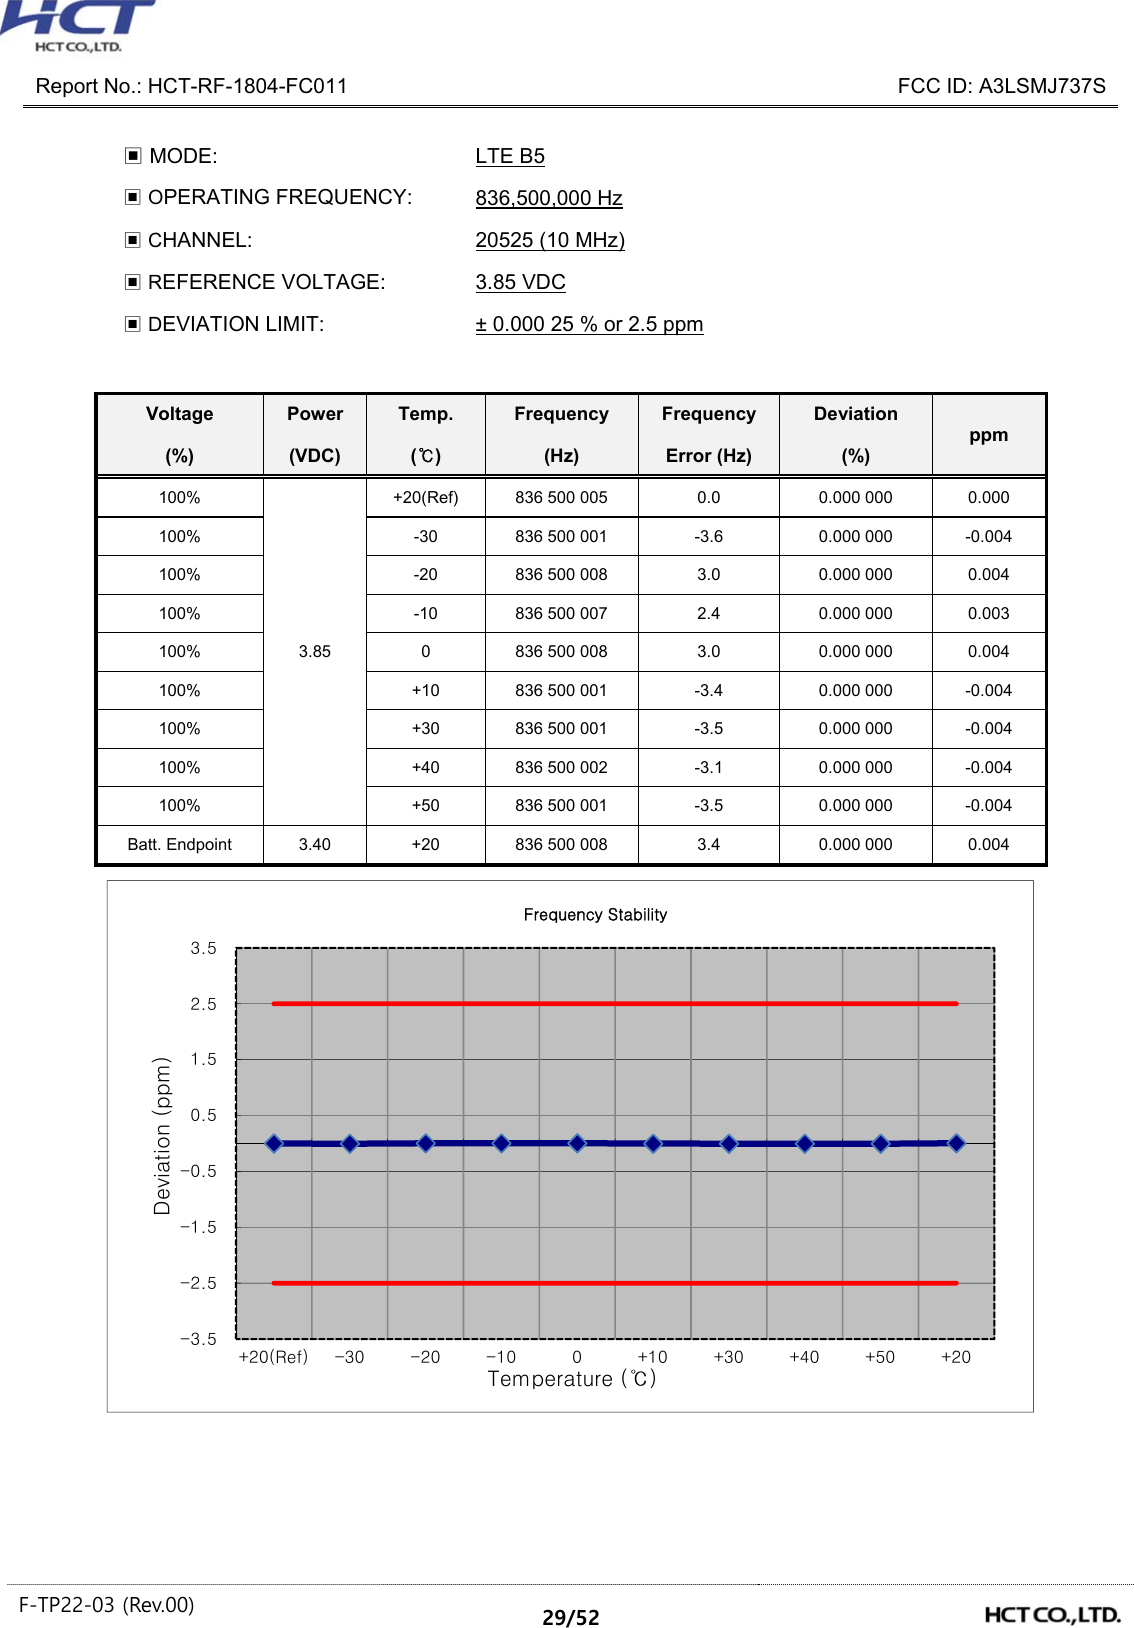  Report No.: HCT-RF-1804-FC011    FCC ID: A3LSMJ737S F-TP22-03 (Rev.00)  29/52  ▣ MODE:  LTE B5 ▣ OPERATING FREQUENCY: 836,500,000 Hz ▣ CHANNEL:    20525 (10 MHz) ▣ REFERENCE VOLTAGE: 3.85 VDC ▣ DEVIATION LIMIT: ± 0.000 25 % or 2.5 ppm     -3.5-2.5-1.5-0.50.51.52.53.5+20(Ref) -30 -20 -10 0 +10 +30 +40 +50 +20Deviation (ppm)Temperature (℃)Frequency StabilityVoltage    Power  Temp.  Frequency  Frequency  Deviation ppm (%)  (VDC)  (℃)  (Hz)  Error (Hz)  (%) 100% 3.85 +20(Ref)  836 500 005  0.0    0.000 000  0.000   100% -30 836 500 001  -3.6    0.000 000  -0.004   100% -20 836 500 008  3.0    0.000 000  0.004   100% -10 836 500 007  2.4    0.000 000  0.003   100% 0 836 500 008  3.0    0.000 000  0.004   100% +10 836 500 001  -3.4    0.000 000  -0.004   100% +30 836 500 001  -3.5    0.000 000  -0.004   100% +40 836 500 002  -3.1    0.000 000  -0.004   100% +50 836 500 001  -3.5    0.000 000  -0.004   Batt. Endpoint  3.40  +20  836 500 008  3.4    0.000 000  0.004   